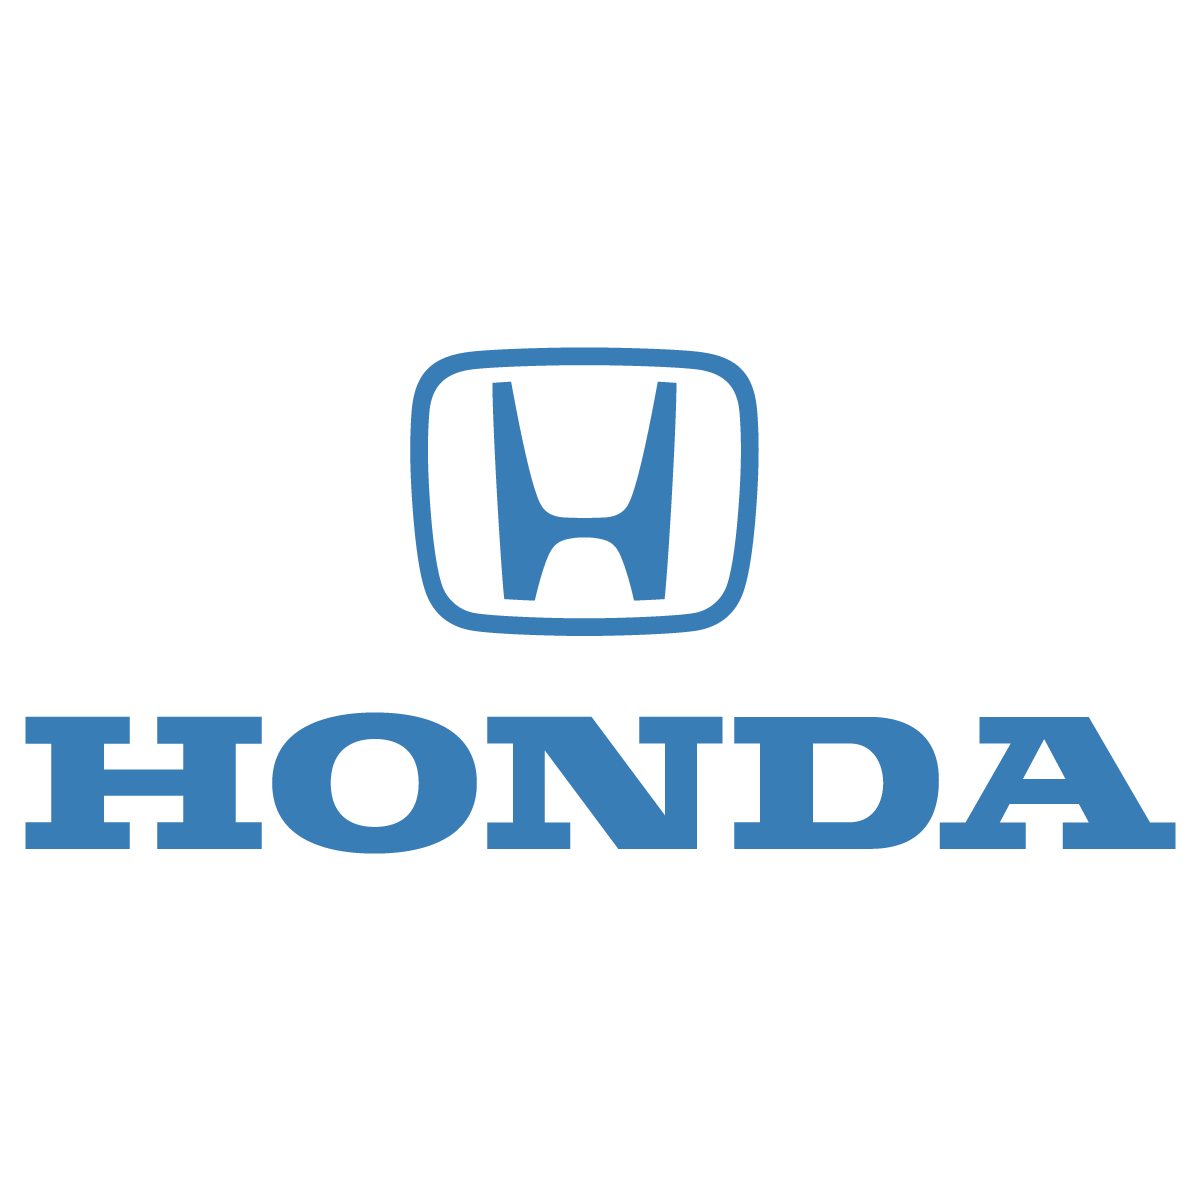 Honda logo.dxf - FREE DXF FILES. FREE CAD SOFTWARE - DXF1.com